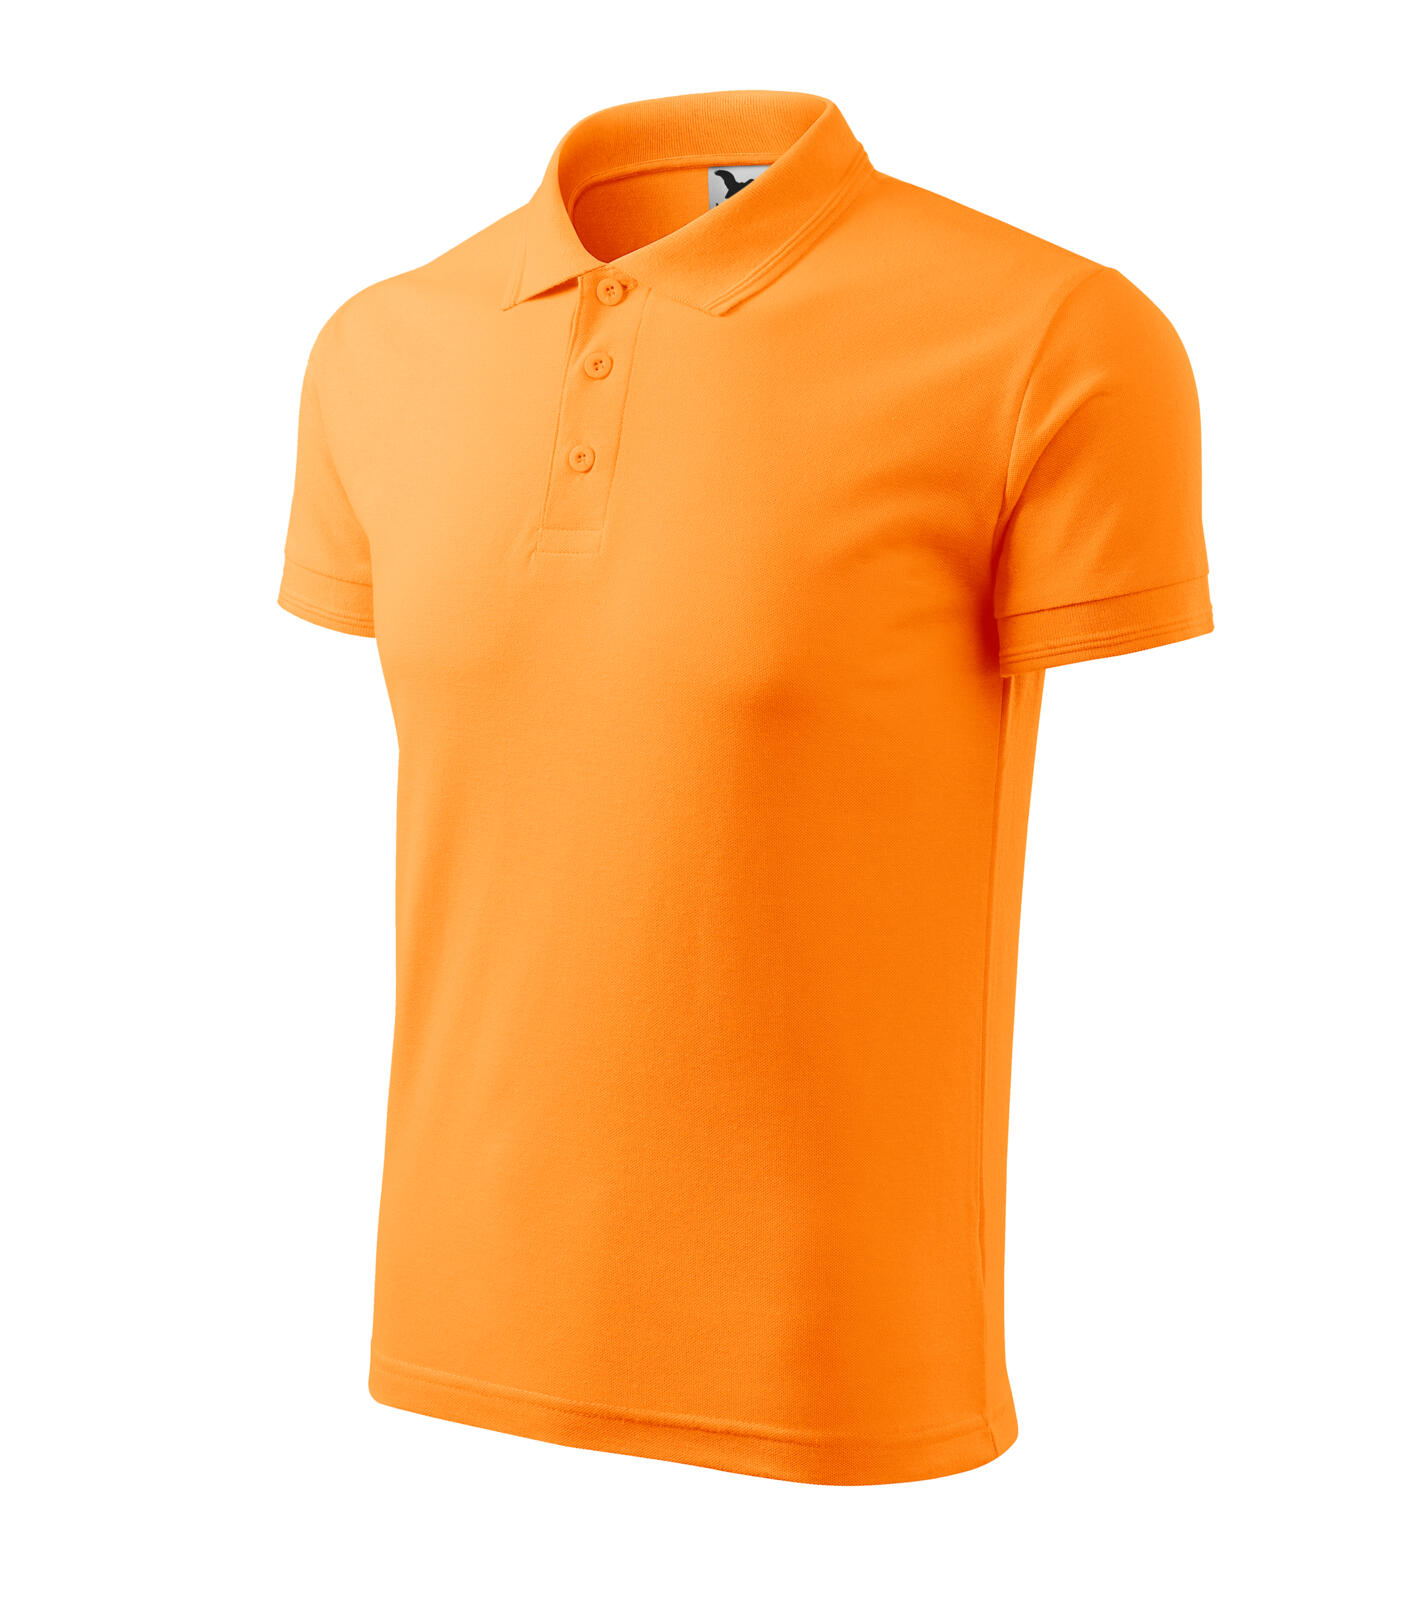 Pique Polo Polokošile pánská Barva: tangerine orange, Velikost: L